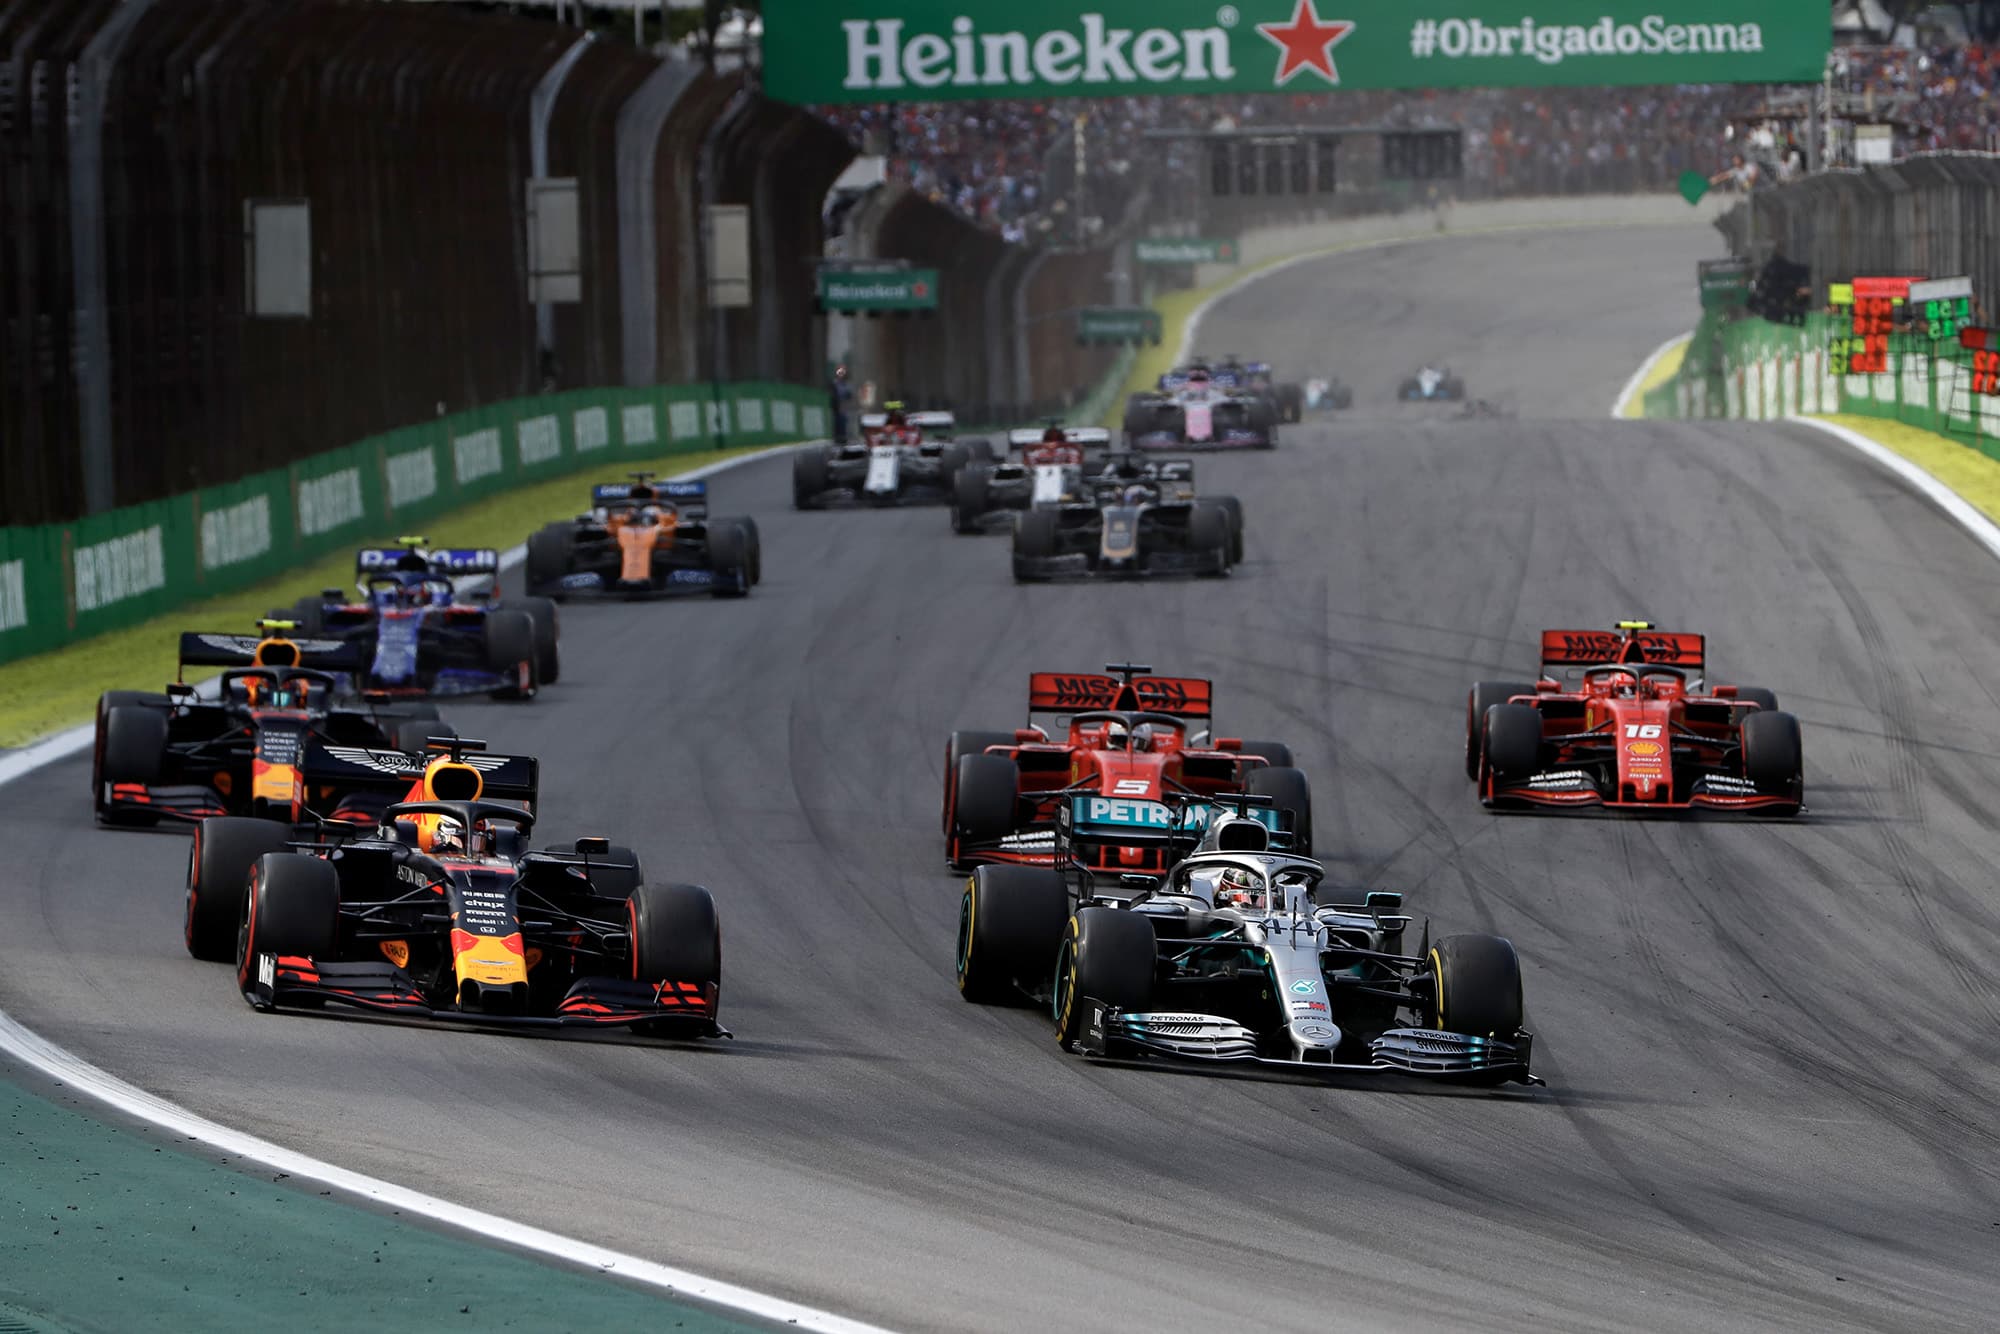 Verstappen ahead at the second restart in the 2019 F1 Brazilian Grand Prix